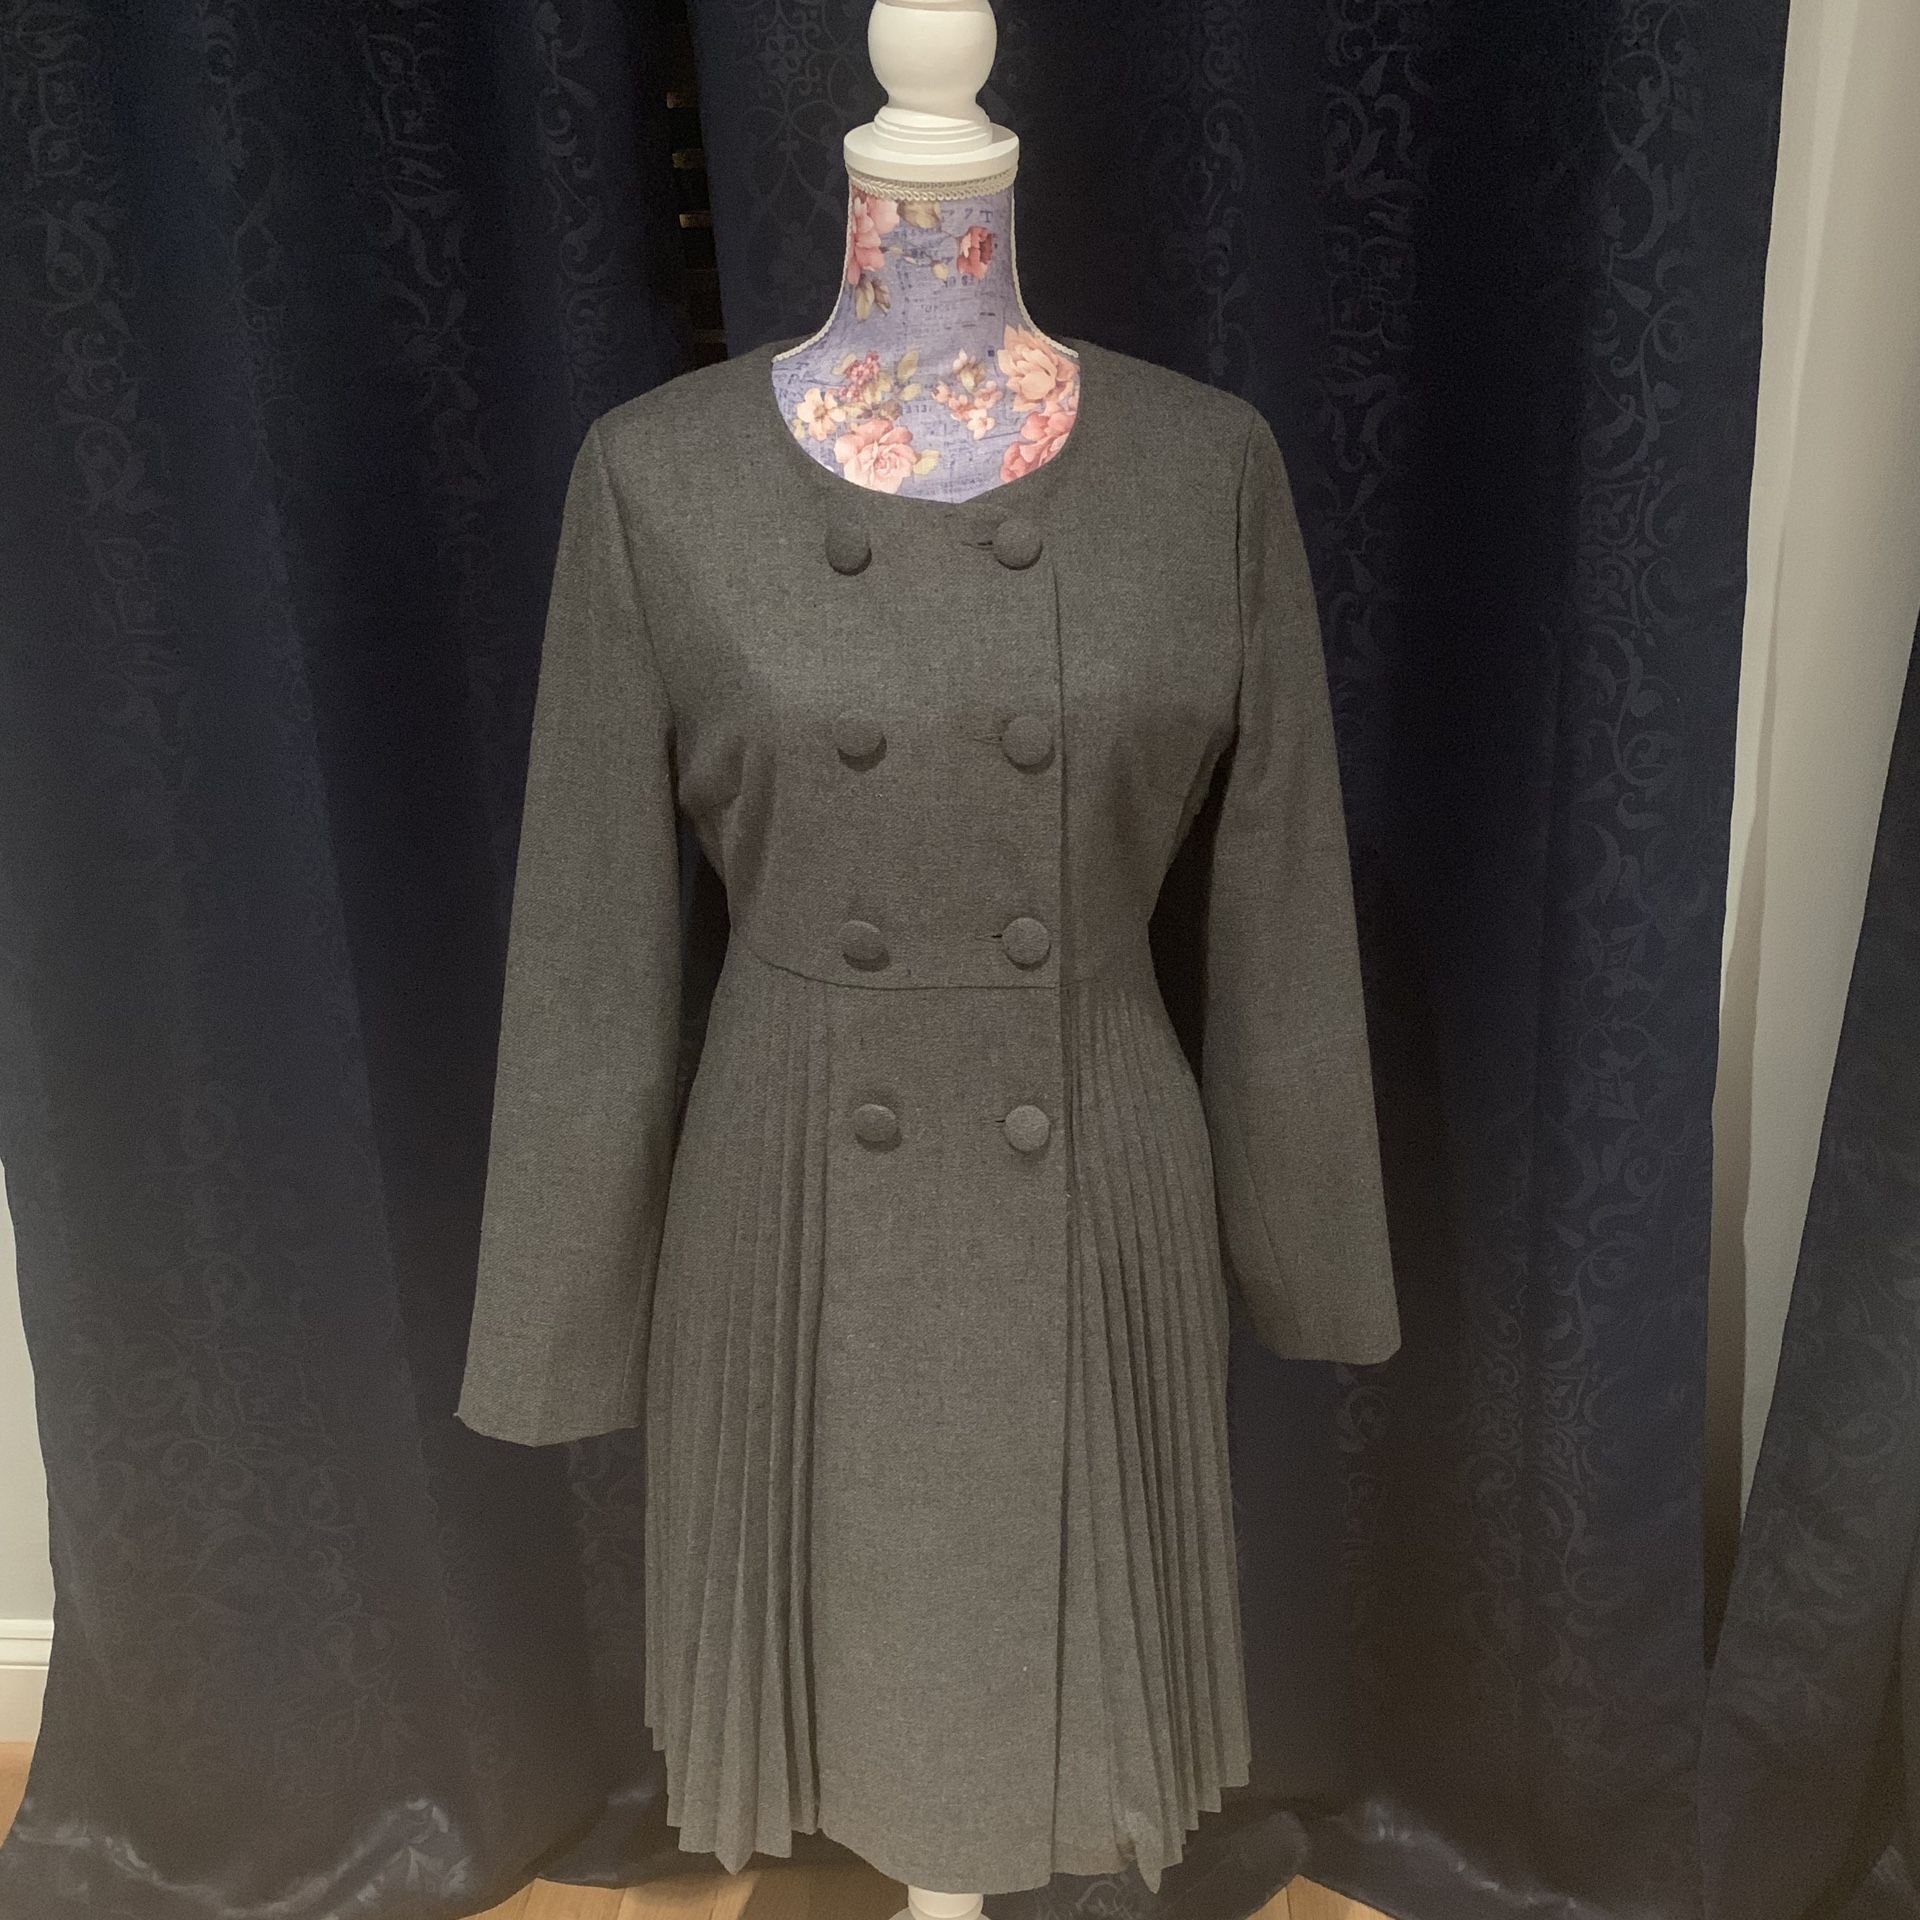 NWOT Darling Wool Top Coat Pleated Dark Grey Jacket/Coat -Size M